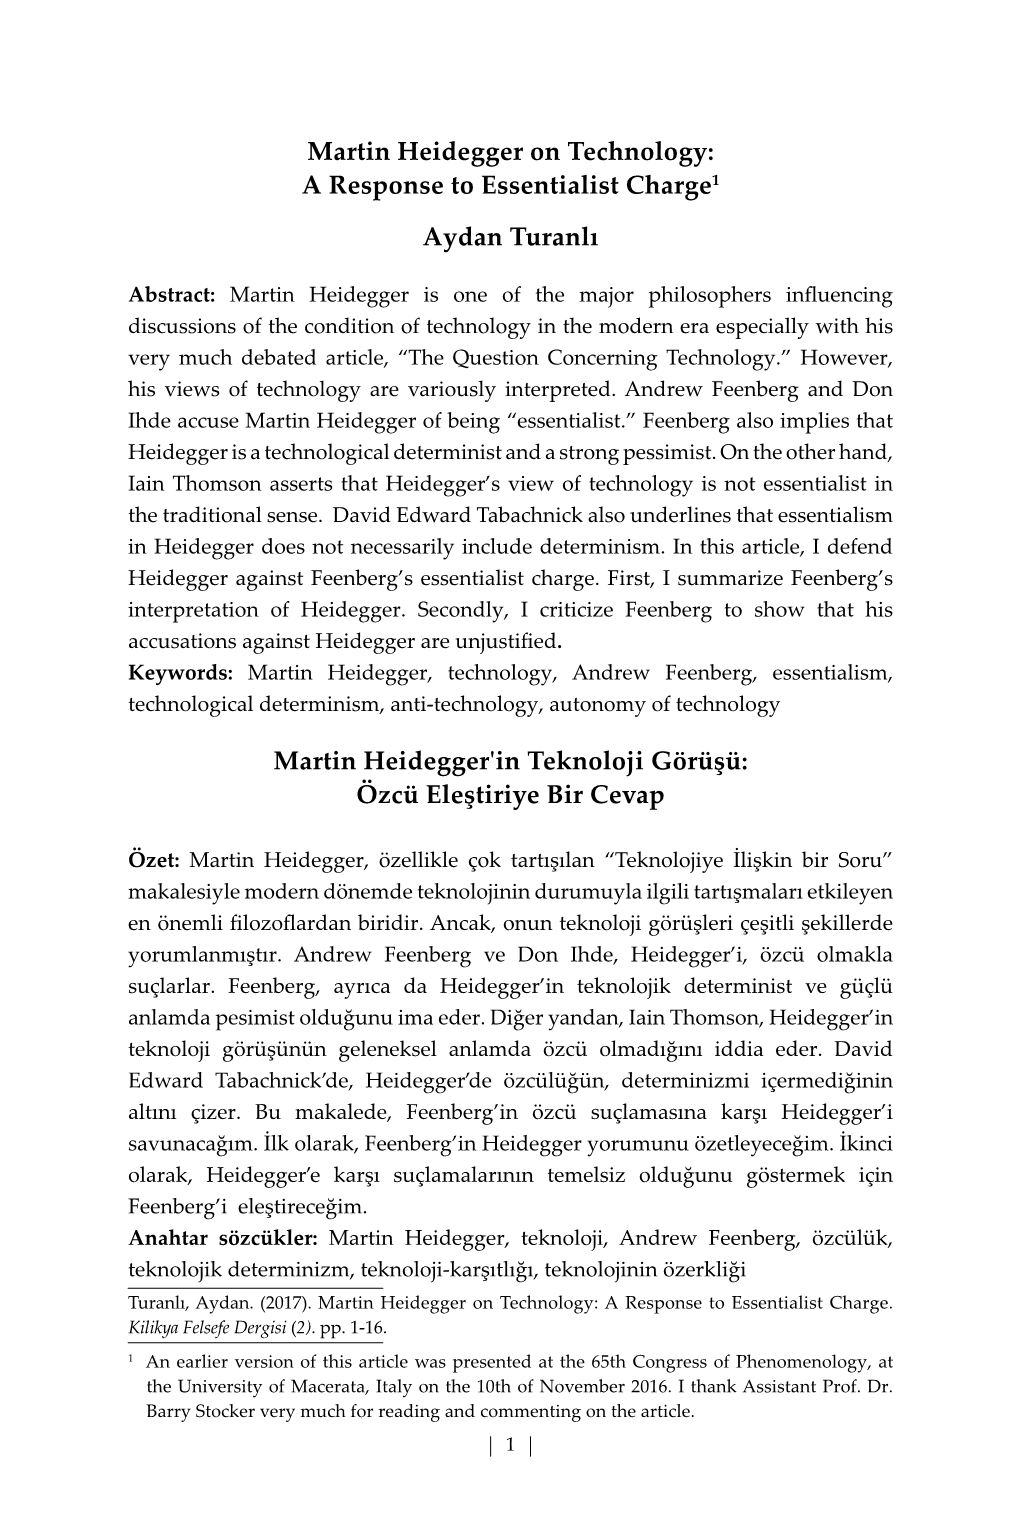 A Response to Essentialist Charge1 Aydan Turanlı Martin Heidegger'in Teknoloji Görüşü